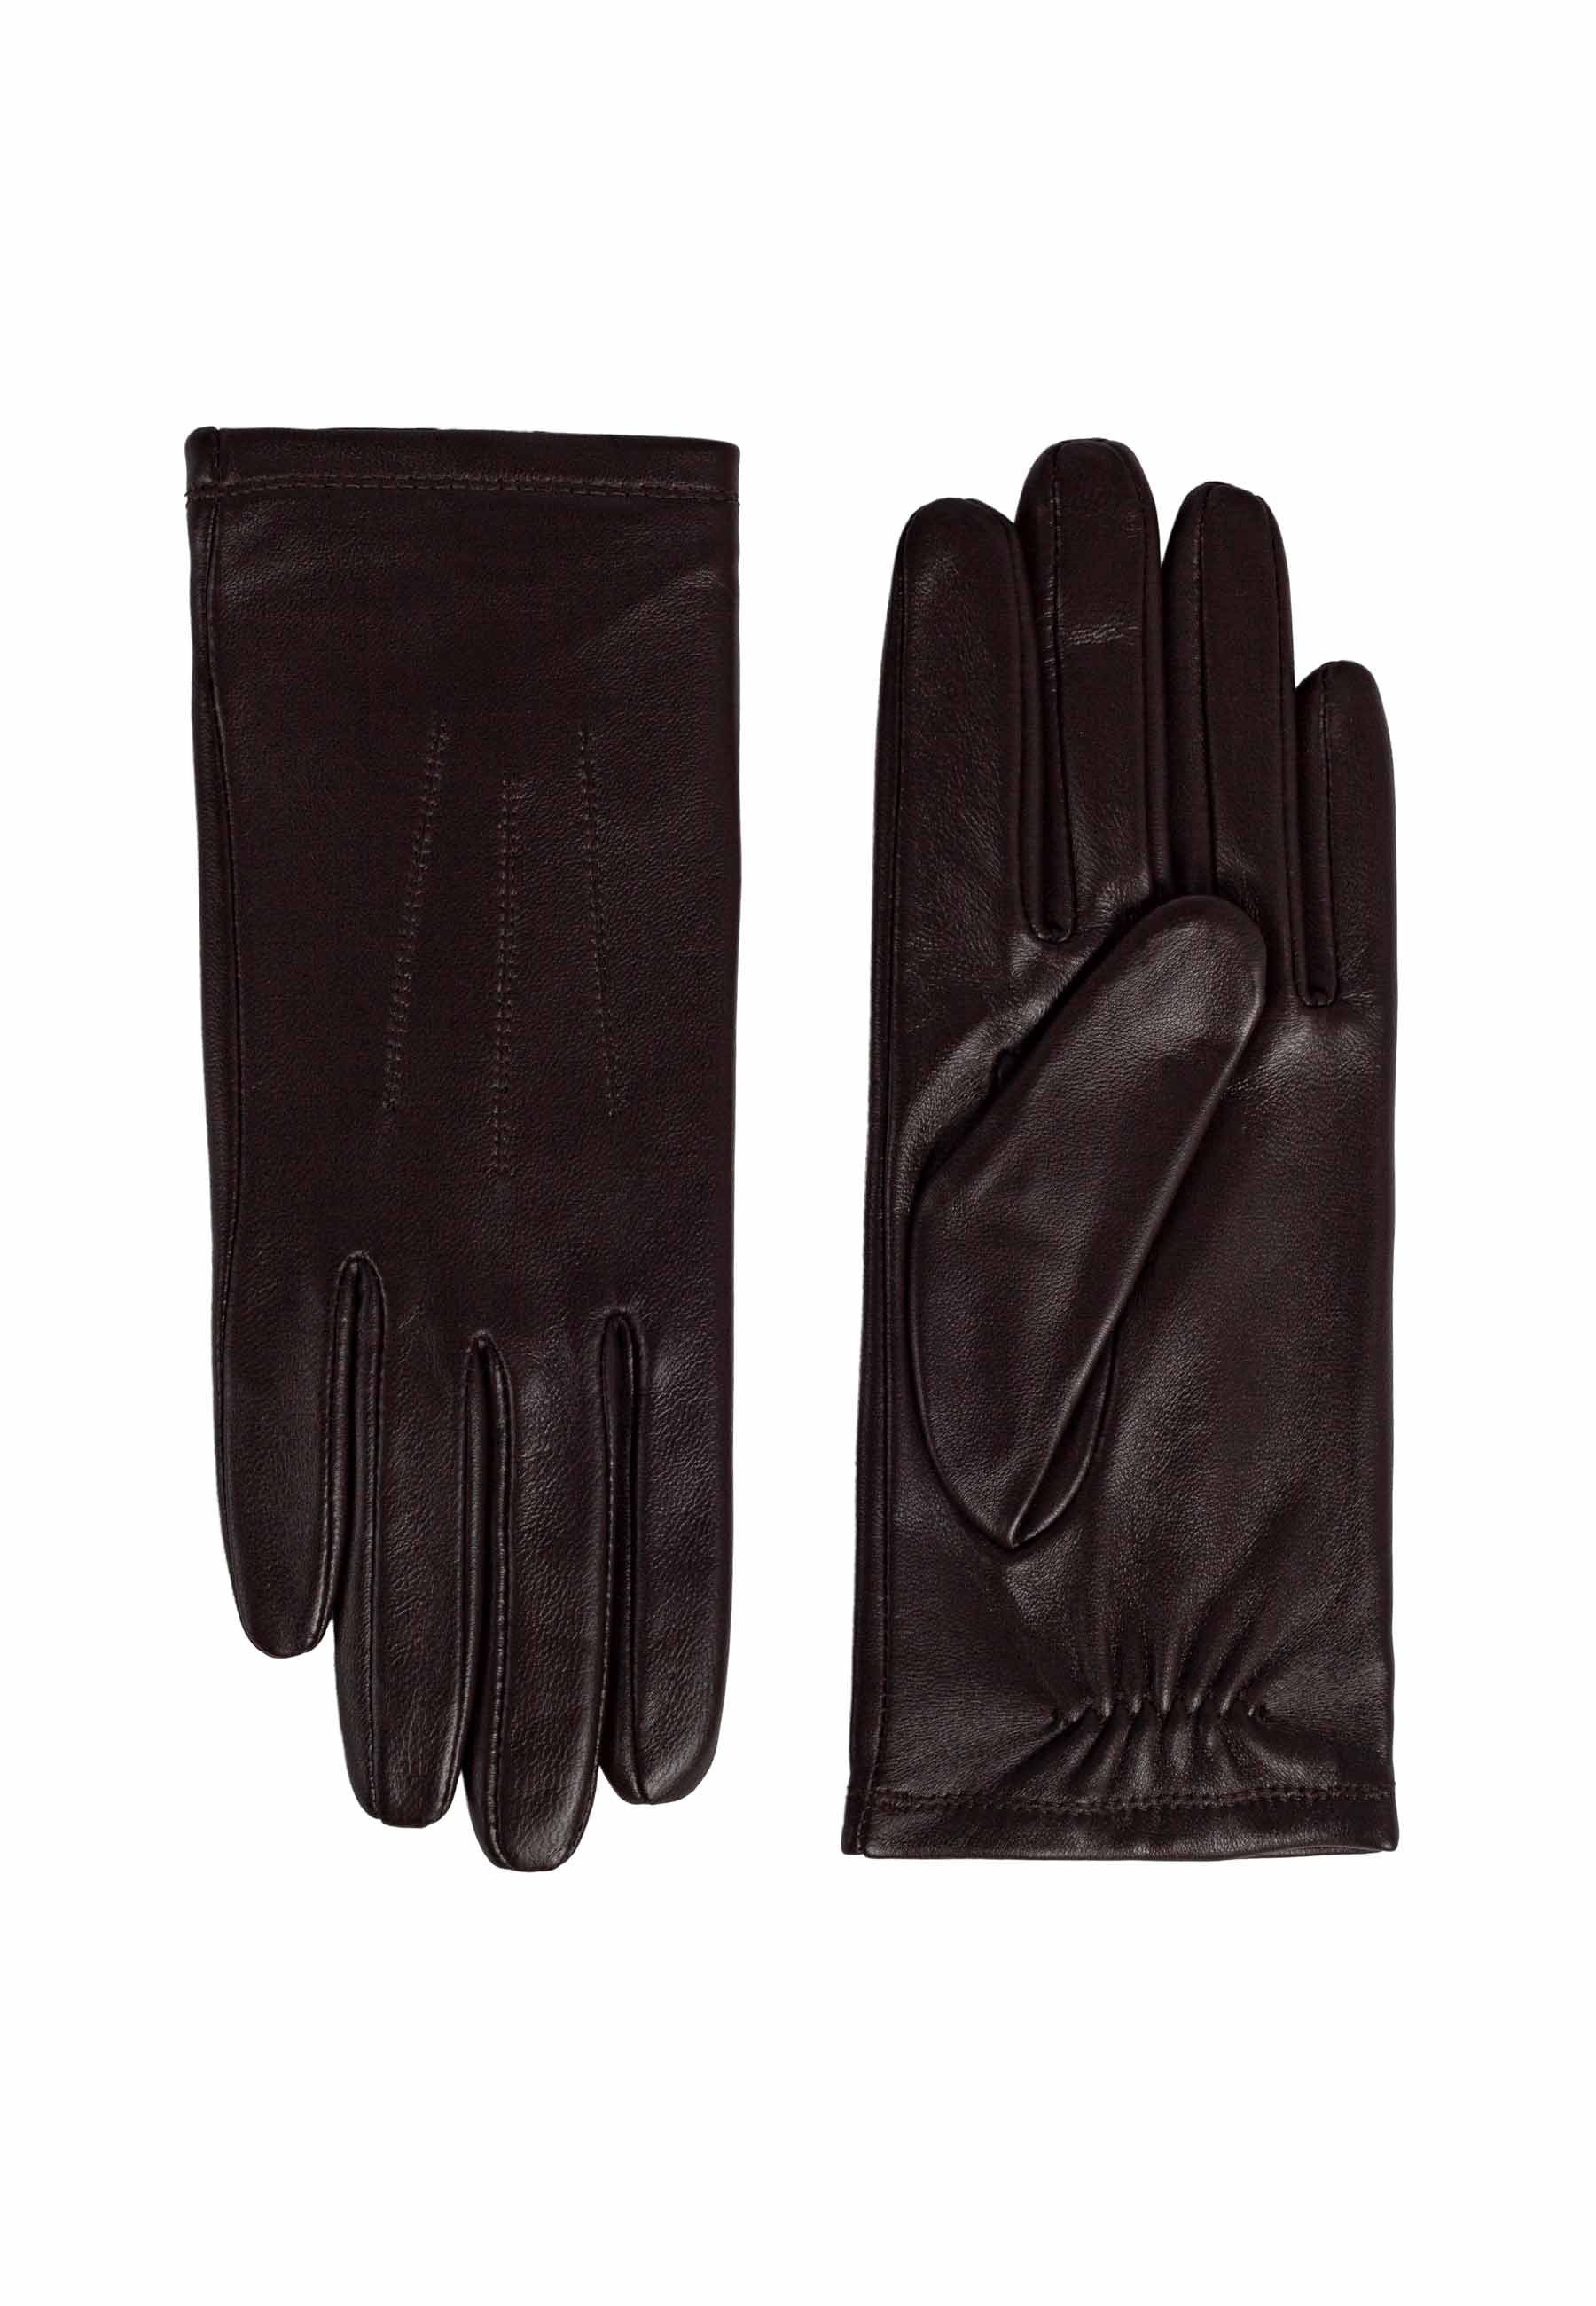 Gloves ok brown Nadja 457 Damenhandschuh Lederhandschuhe